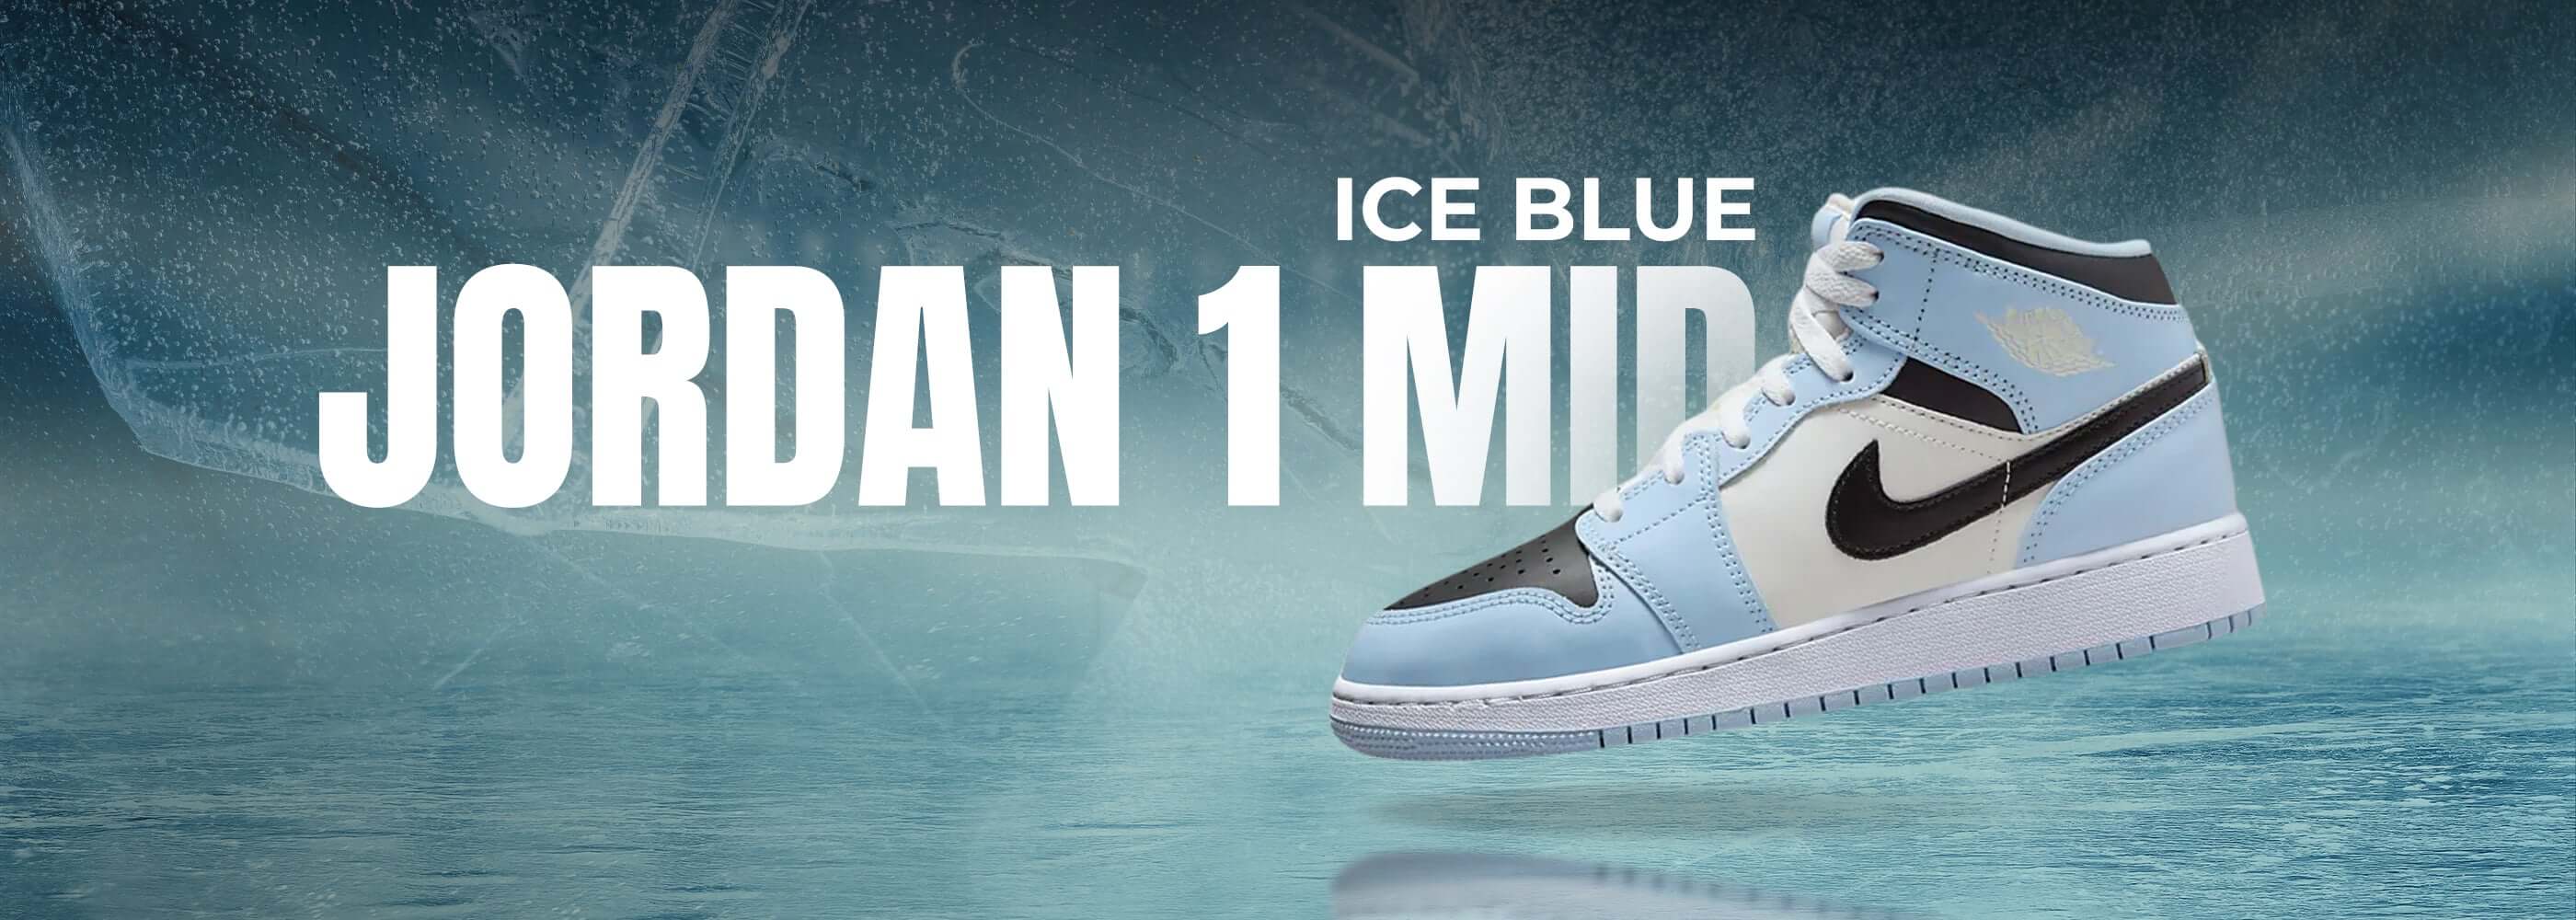 Jordan 1 Mid Ice Blue (GS)